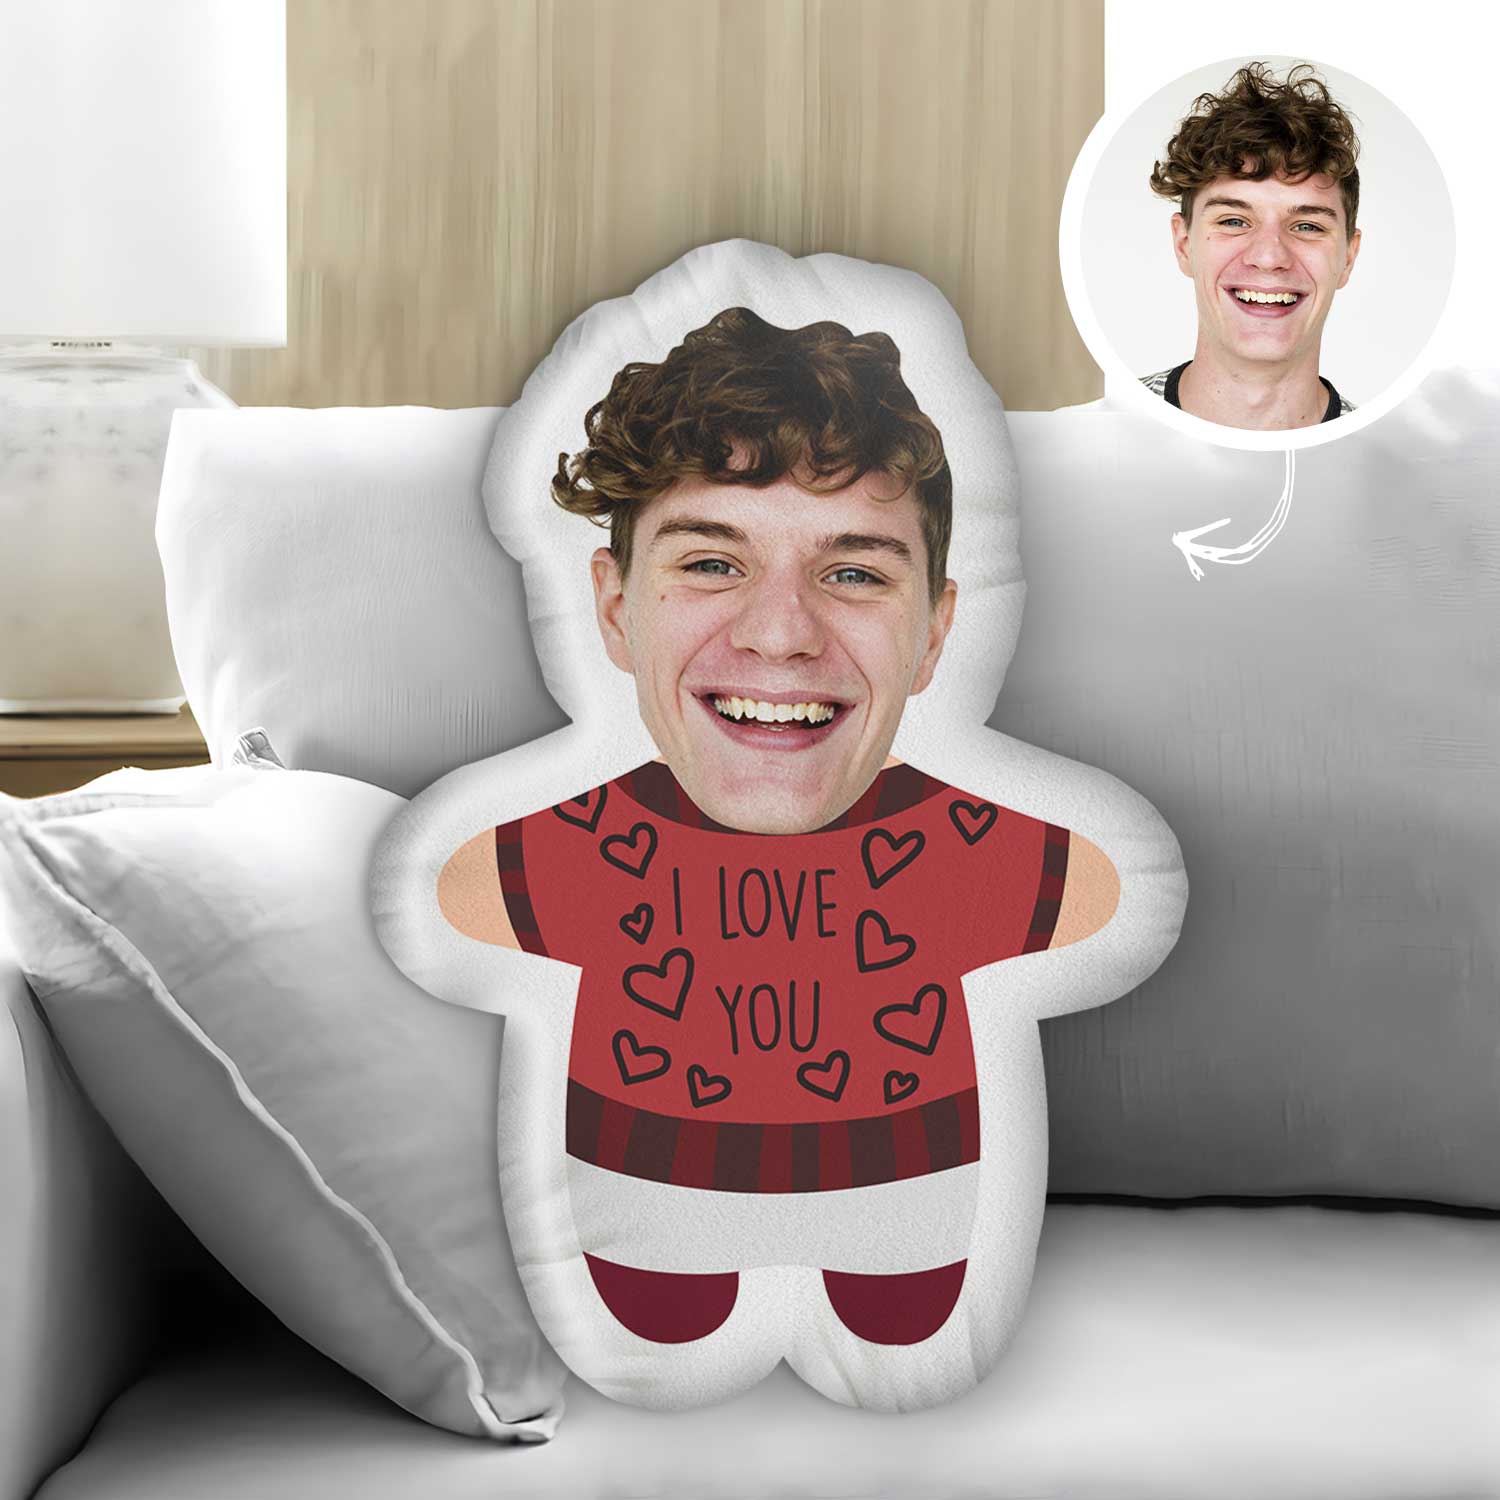 I Love You Boyfriend Pillow - Personalized Custom Shape Pillow - Gift For Couple, Boyfriend, Girlfriend, Wife, Husband, Family Members